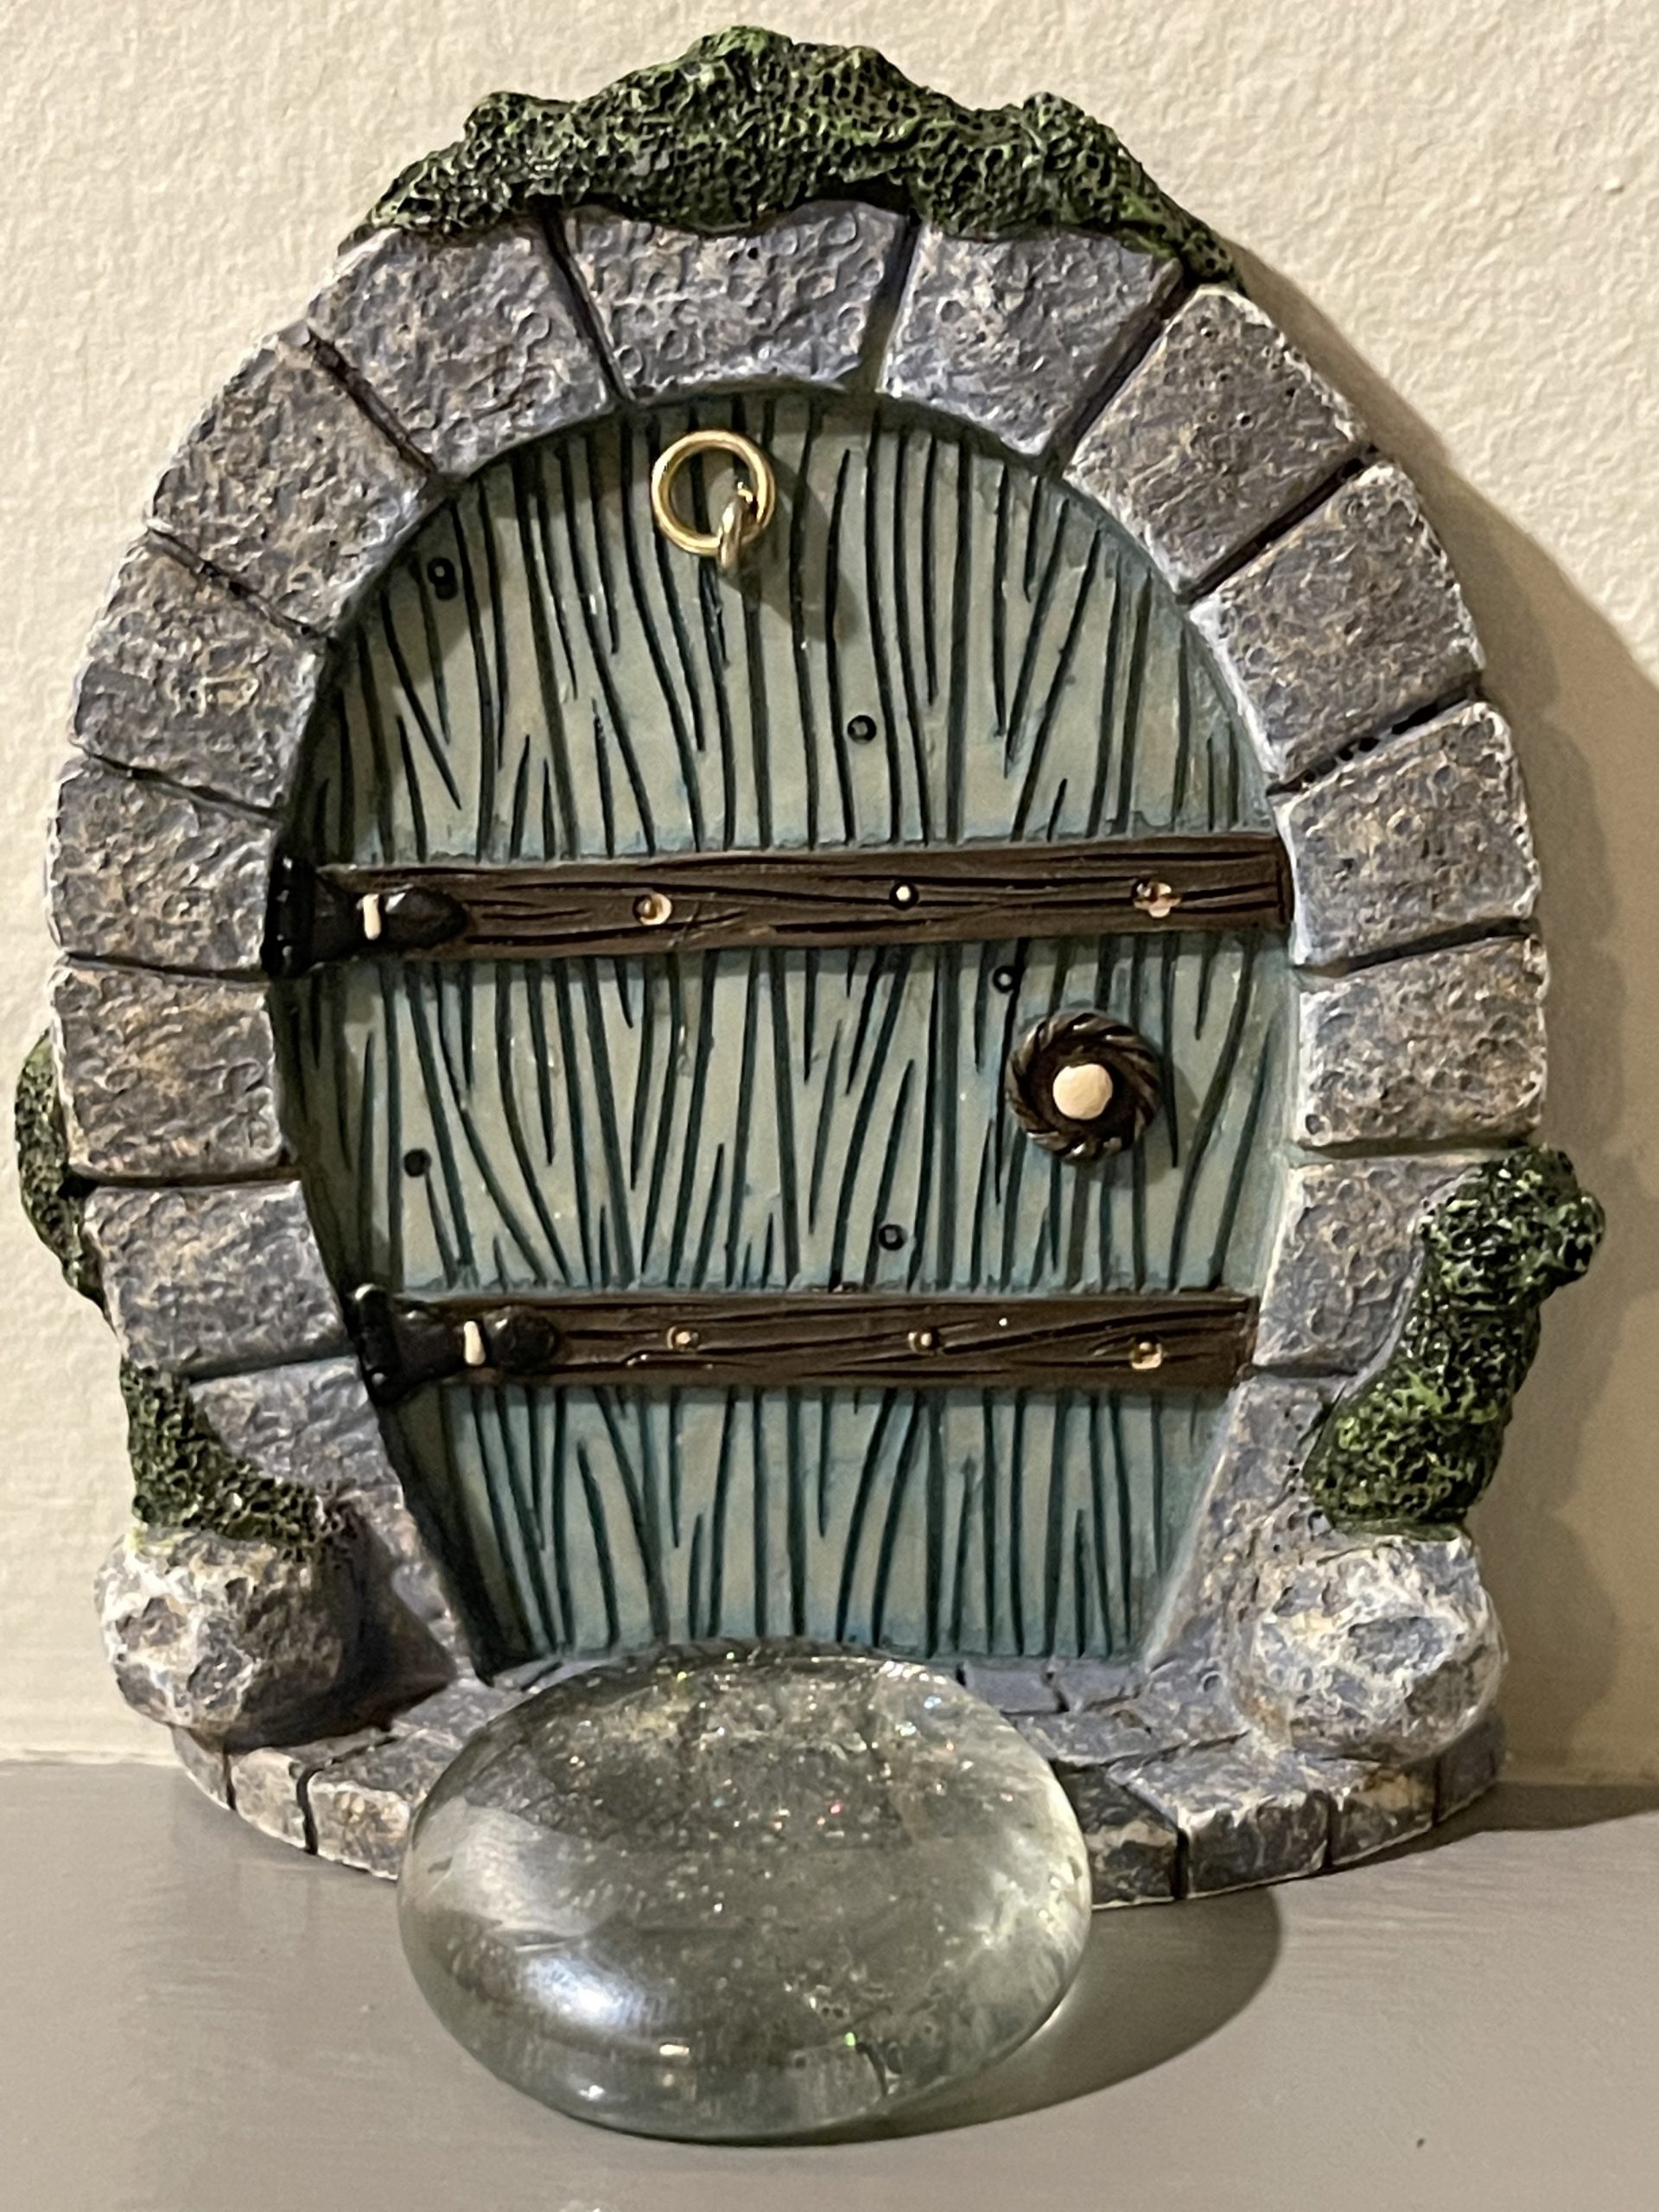 Fairy Door and stone